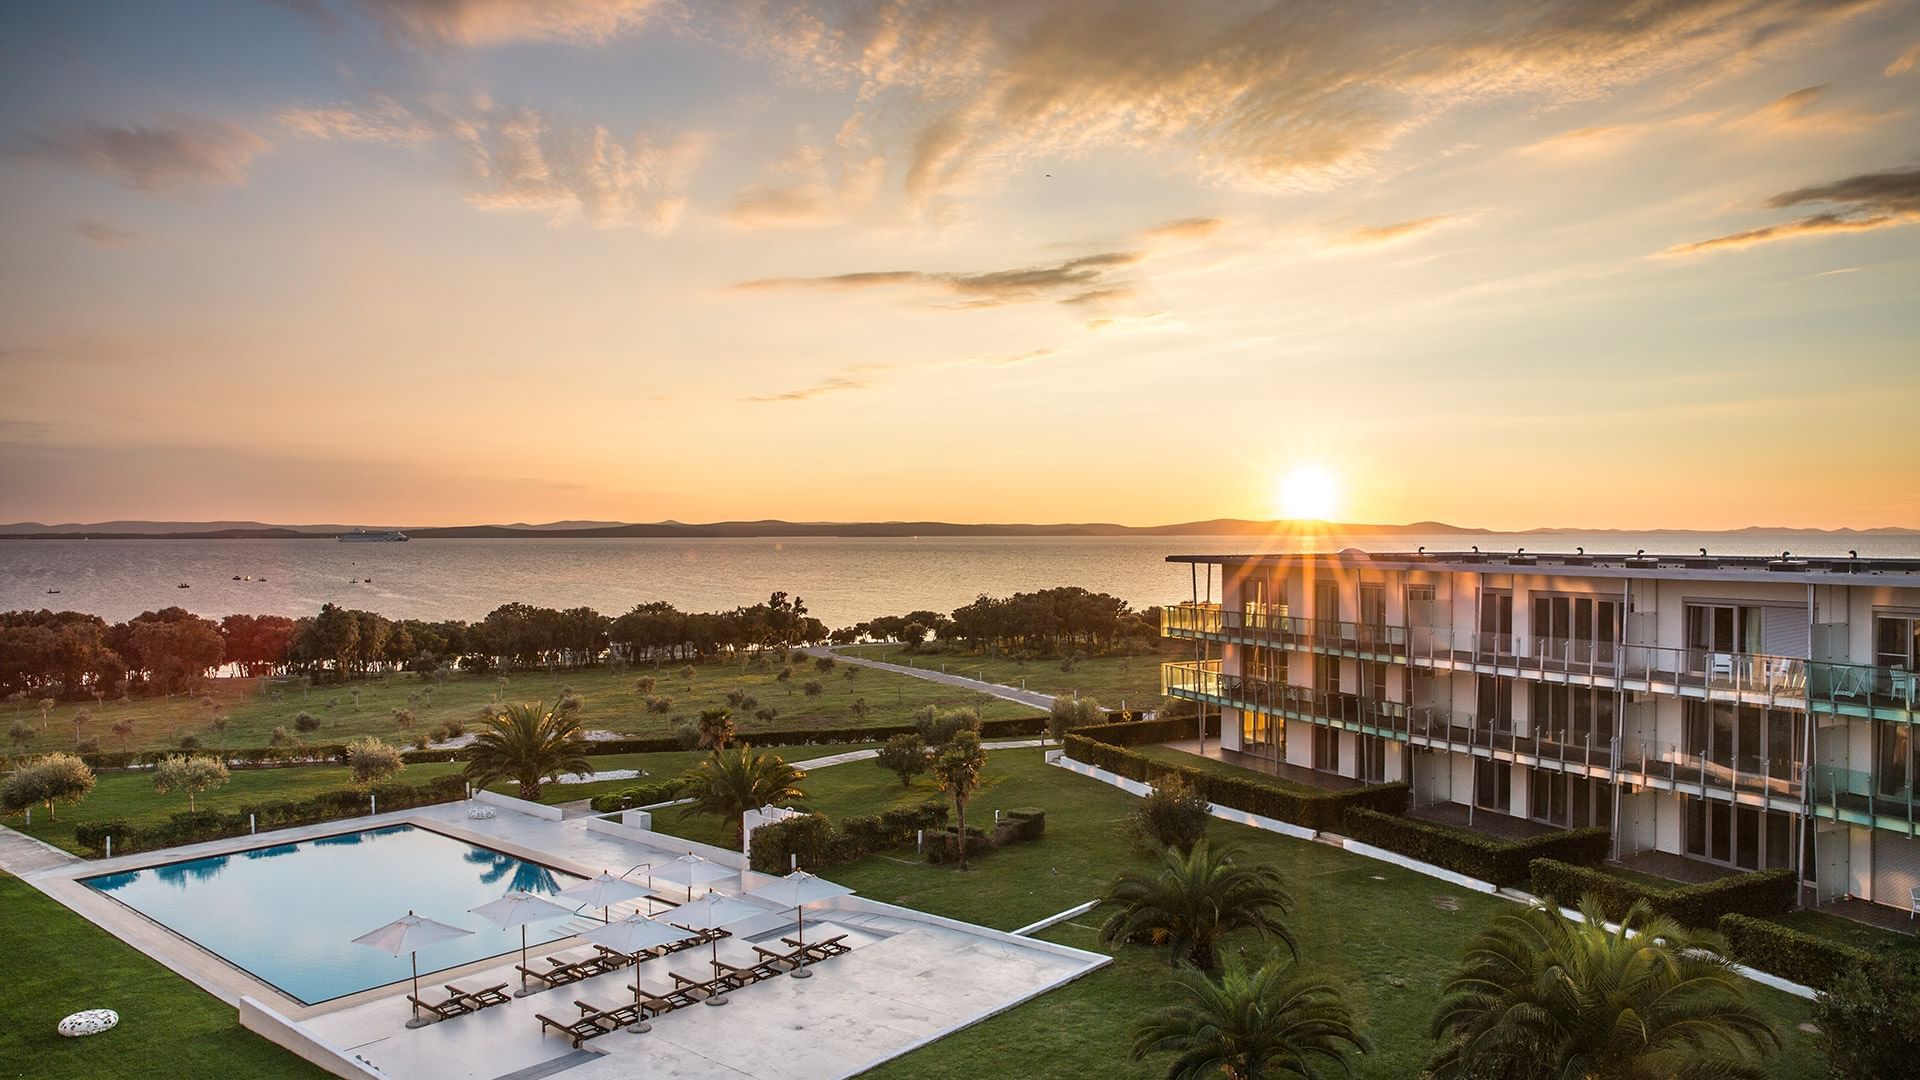 Pool, hotel & ocean view at Falkensteiner Premium Apartments